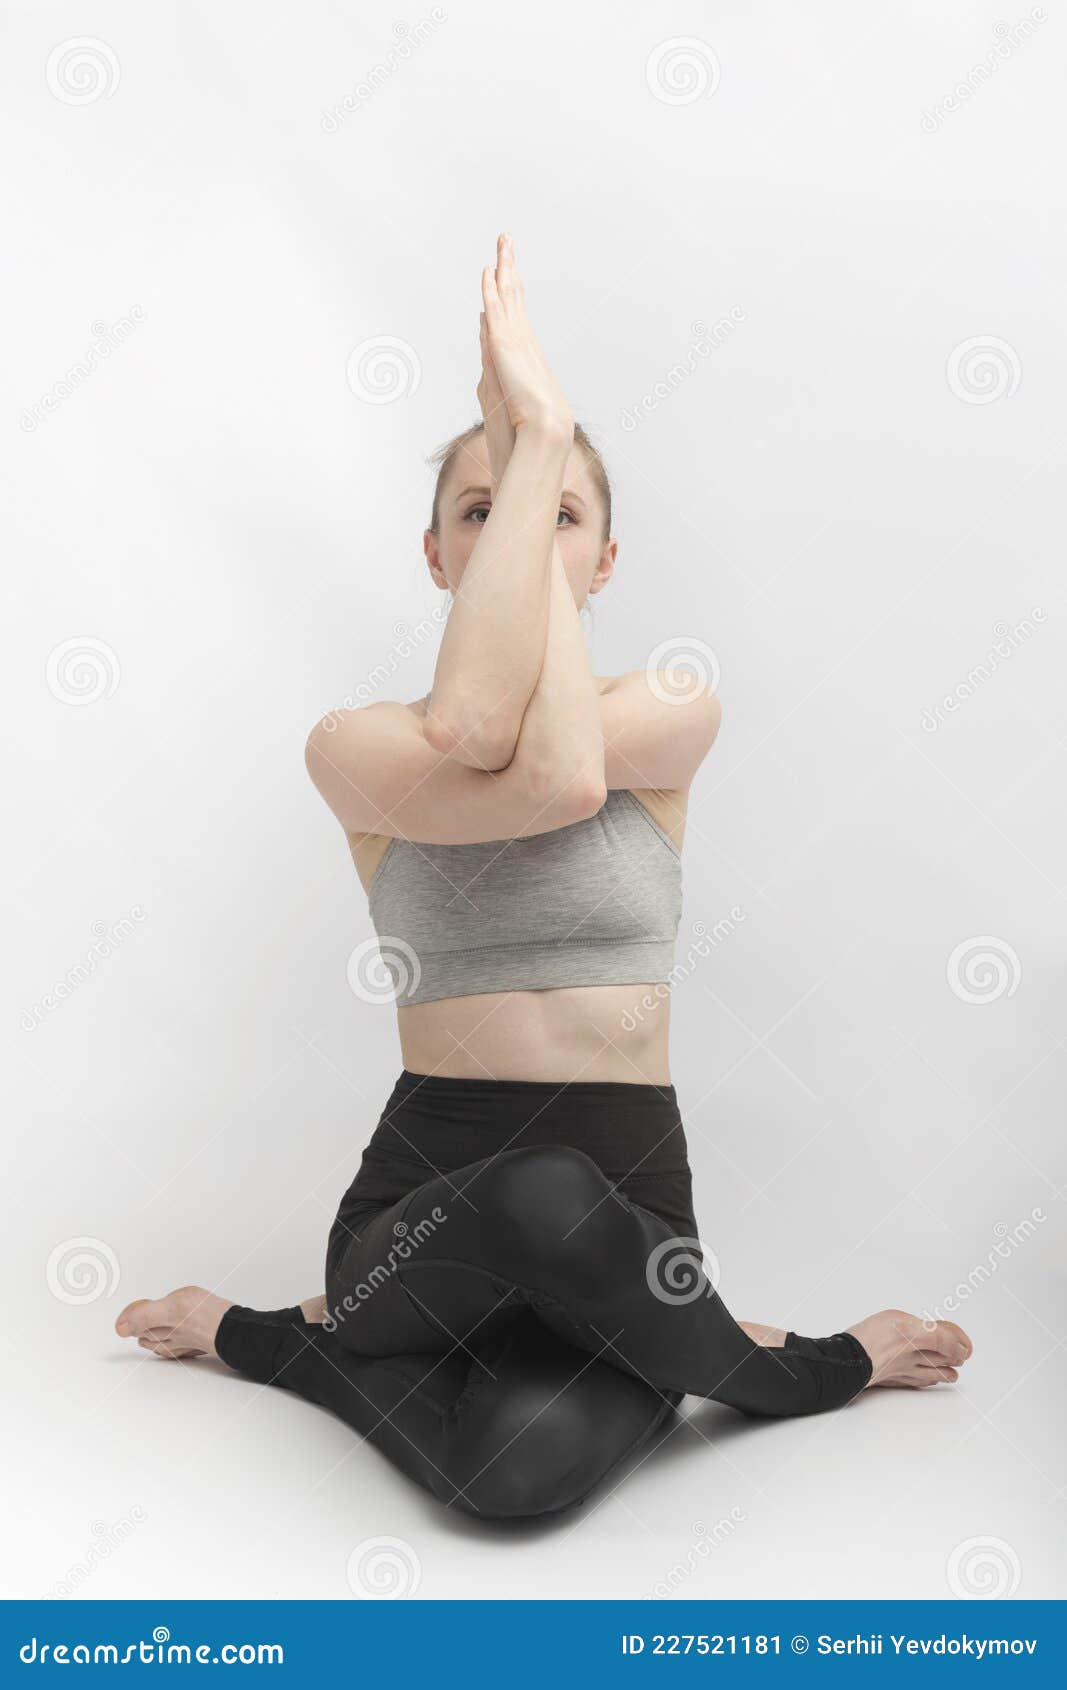 File:Mr-yoga-cow-face-pose.jpg - Wikipedia